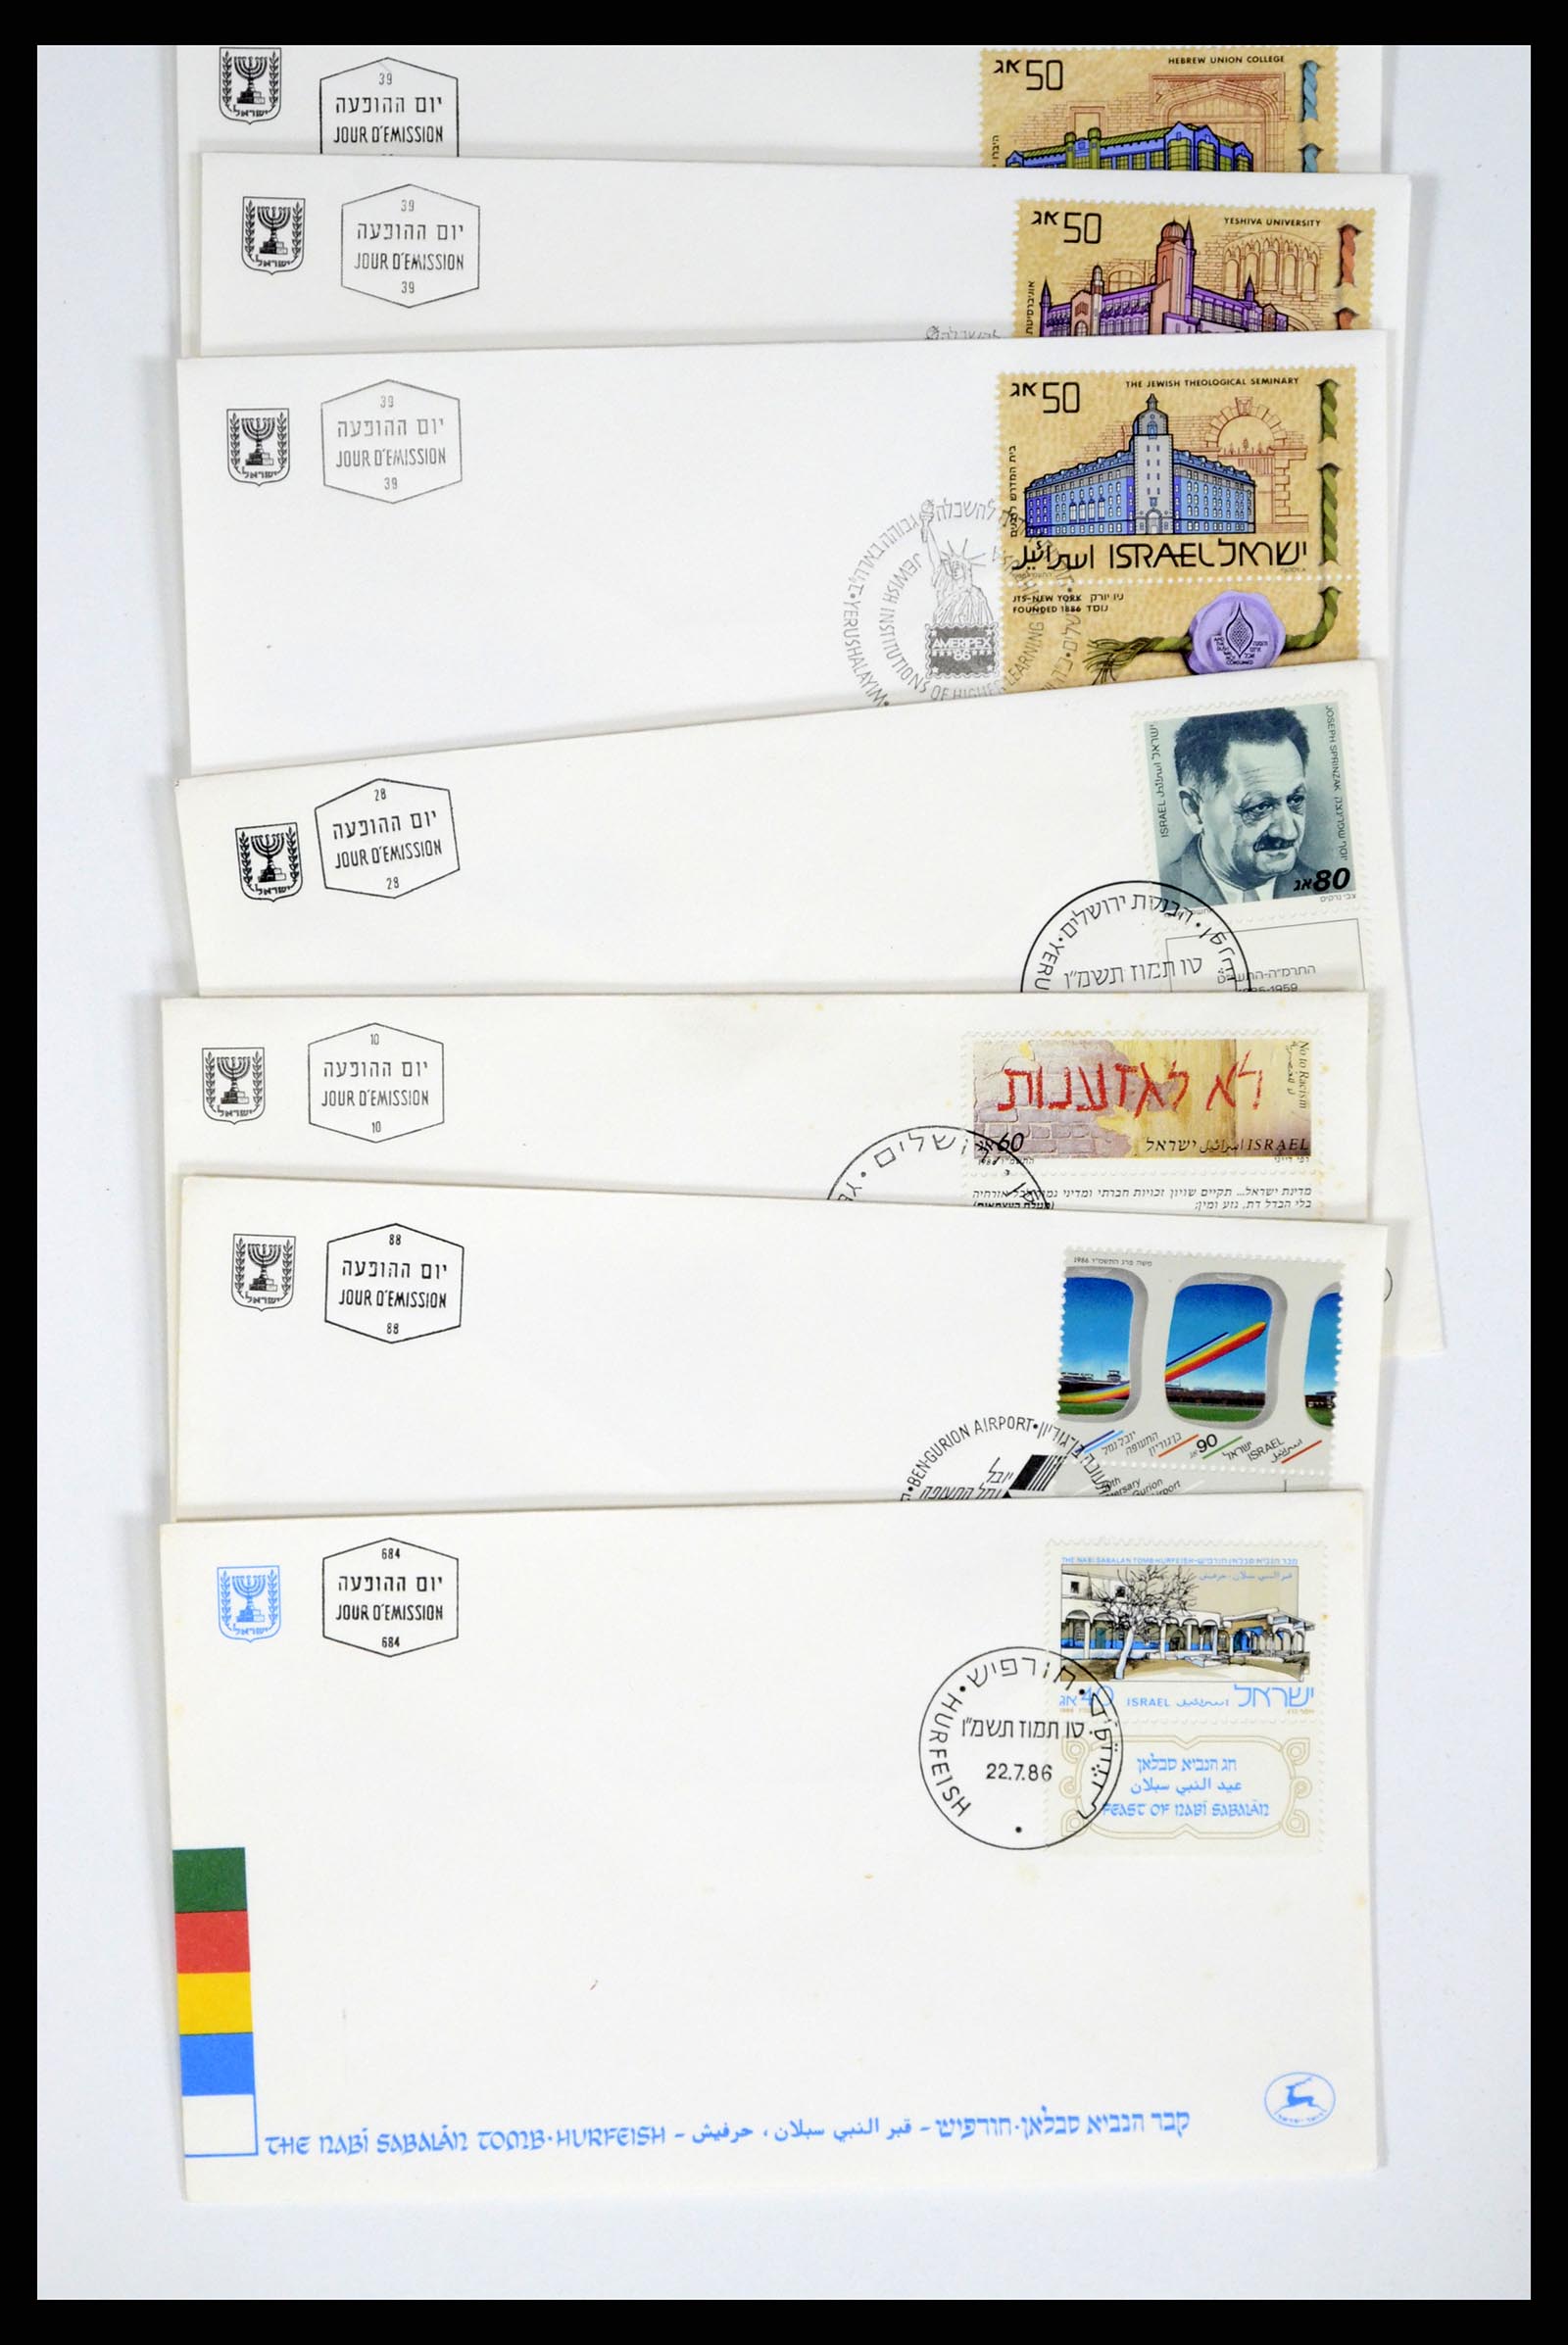 37711 191 - Postzegelverzameling 37711 Israël first day covers 1970-2000.